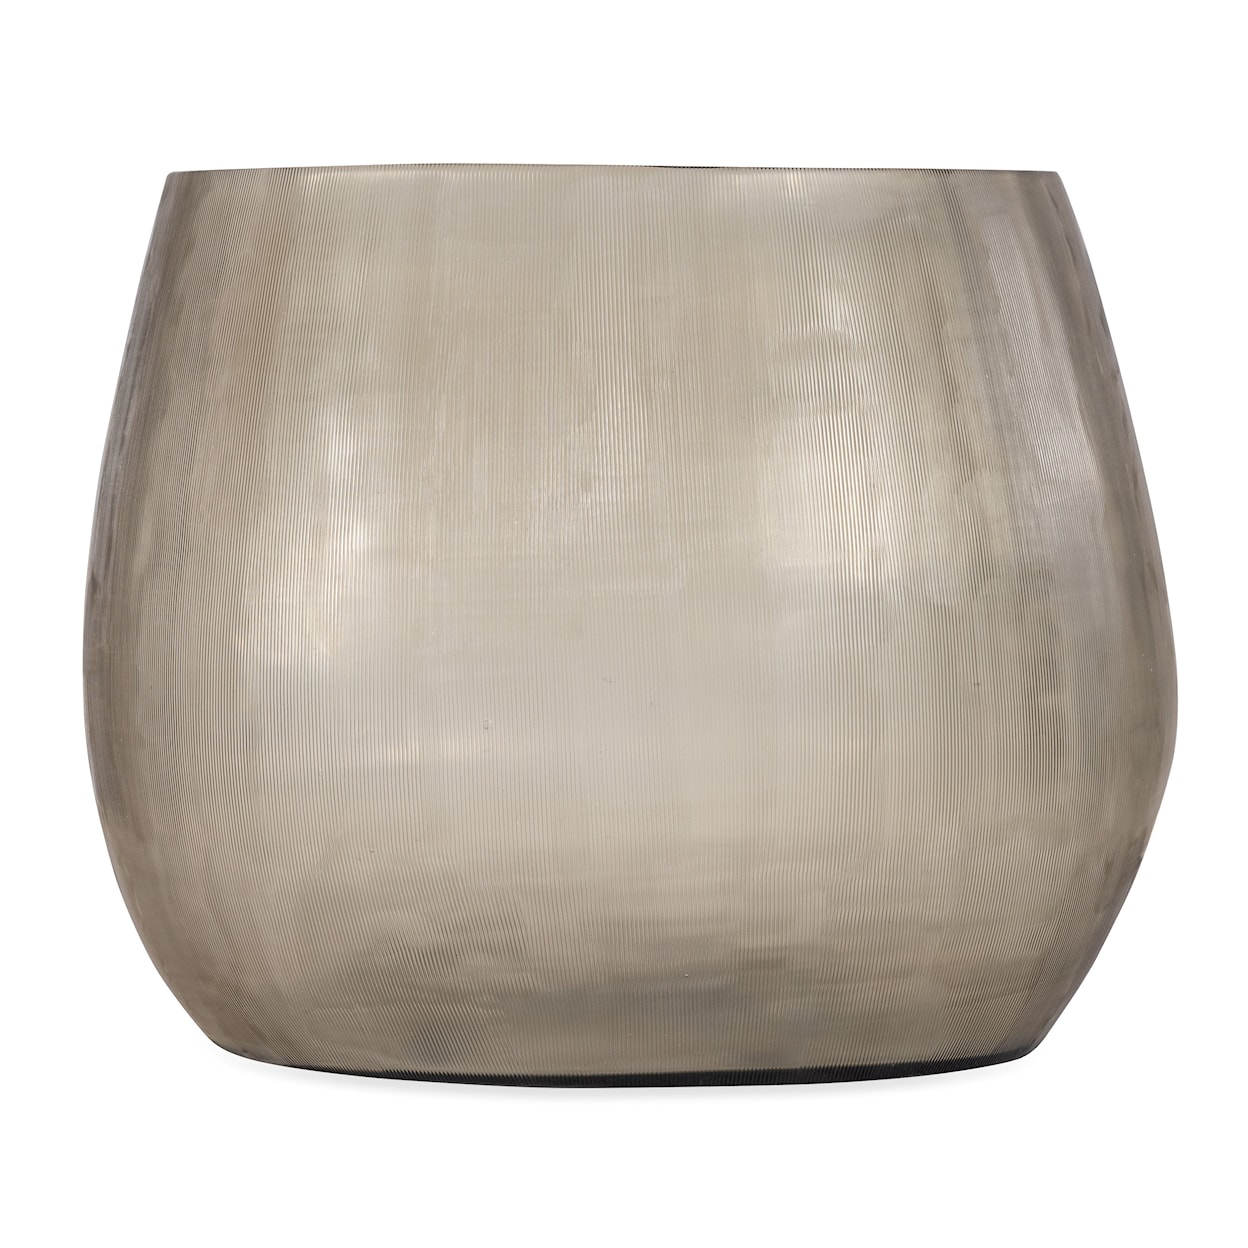 BOBO Intriguing Objects Accessory Smokey Grey Glass Blown Pot - Small